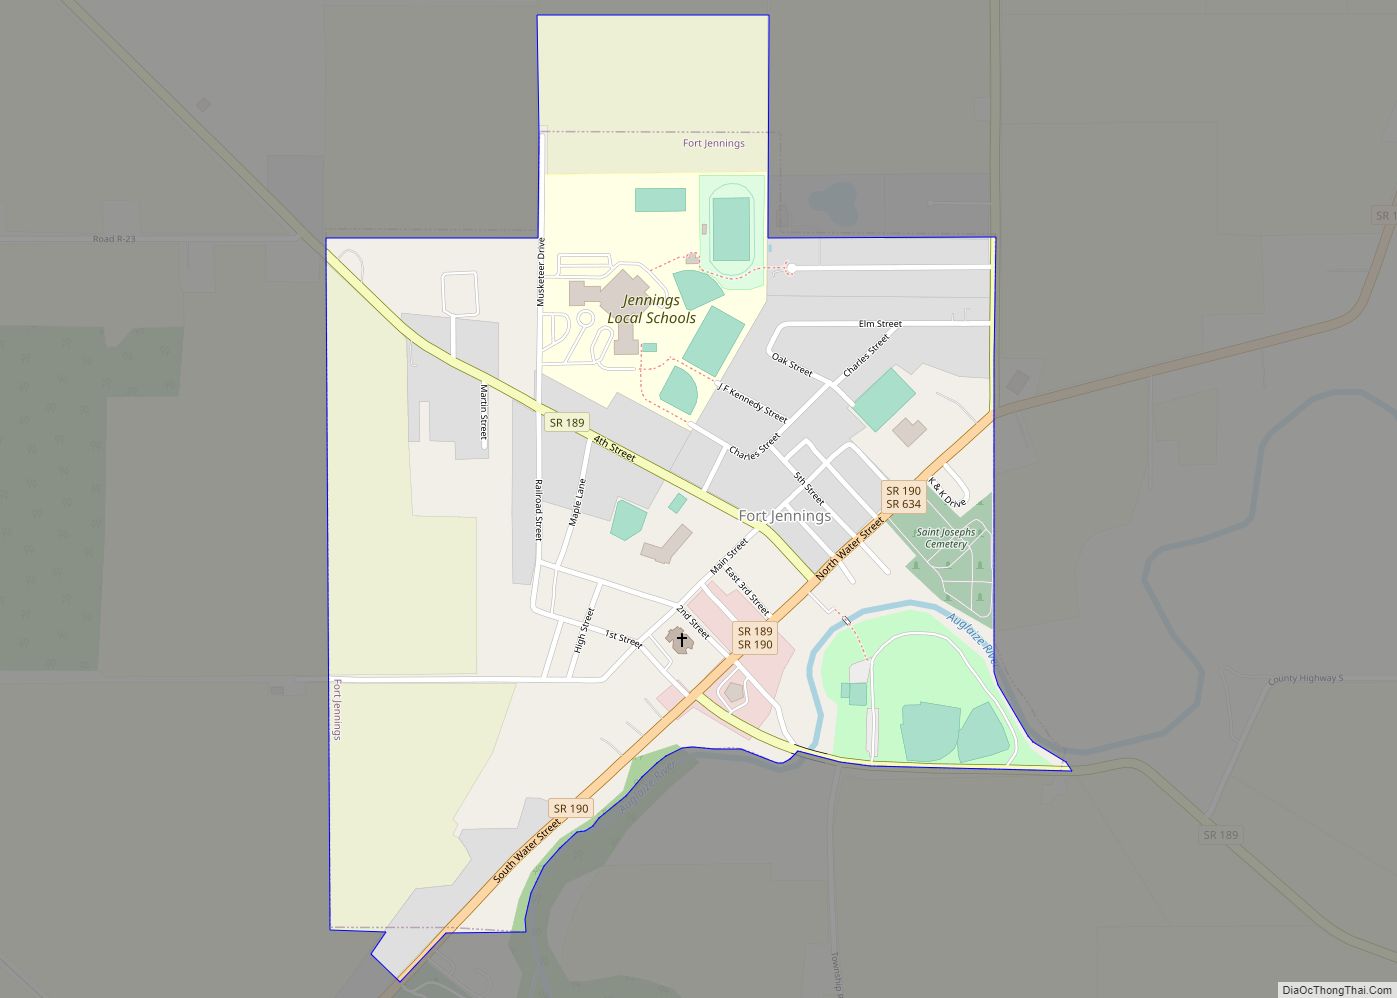 Map of Fort Jennings village